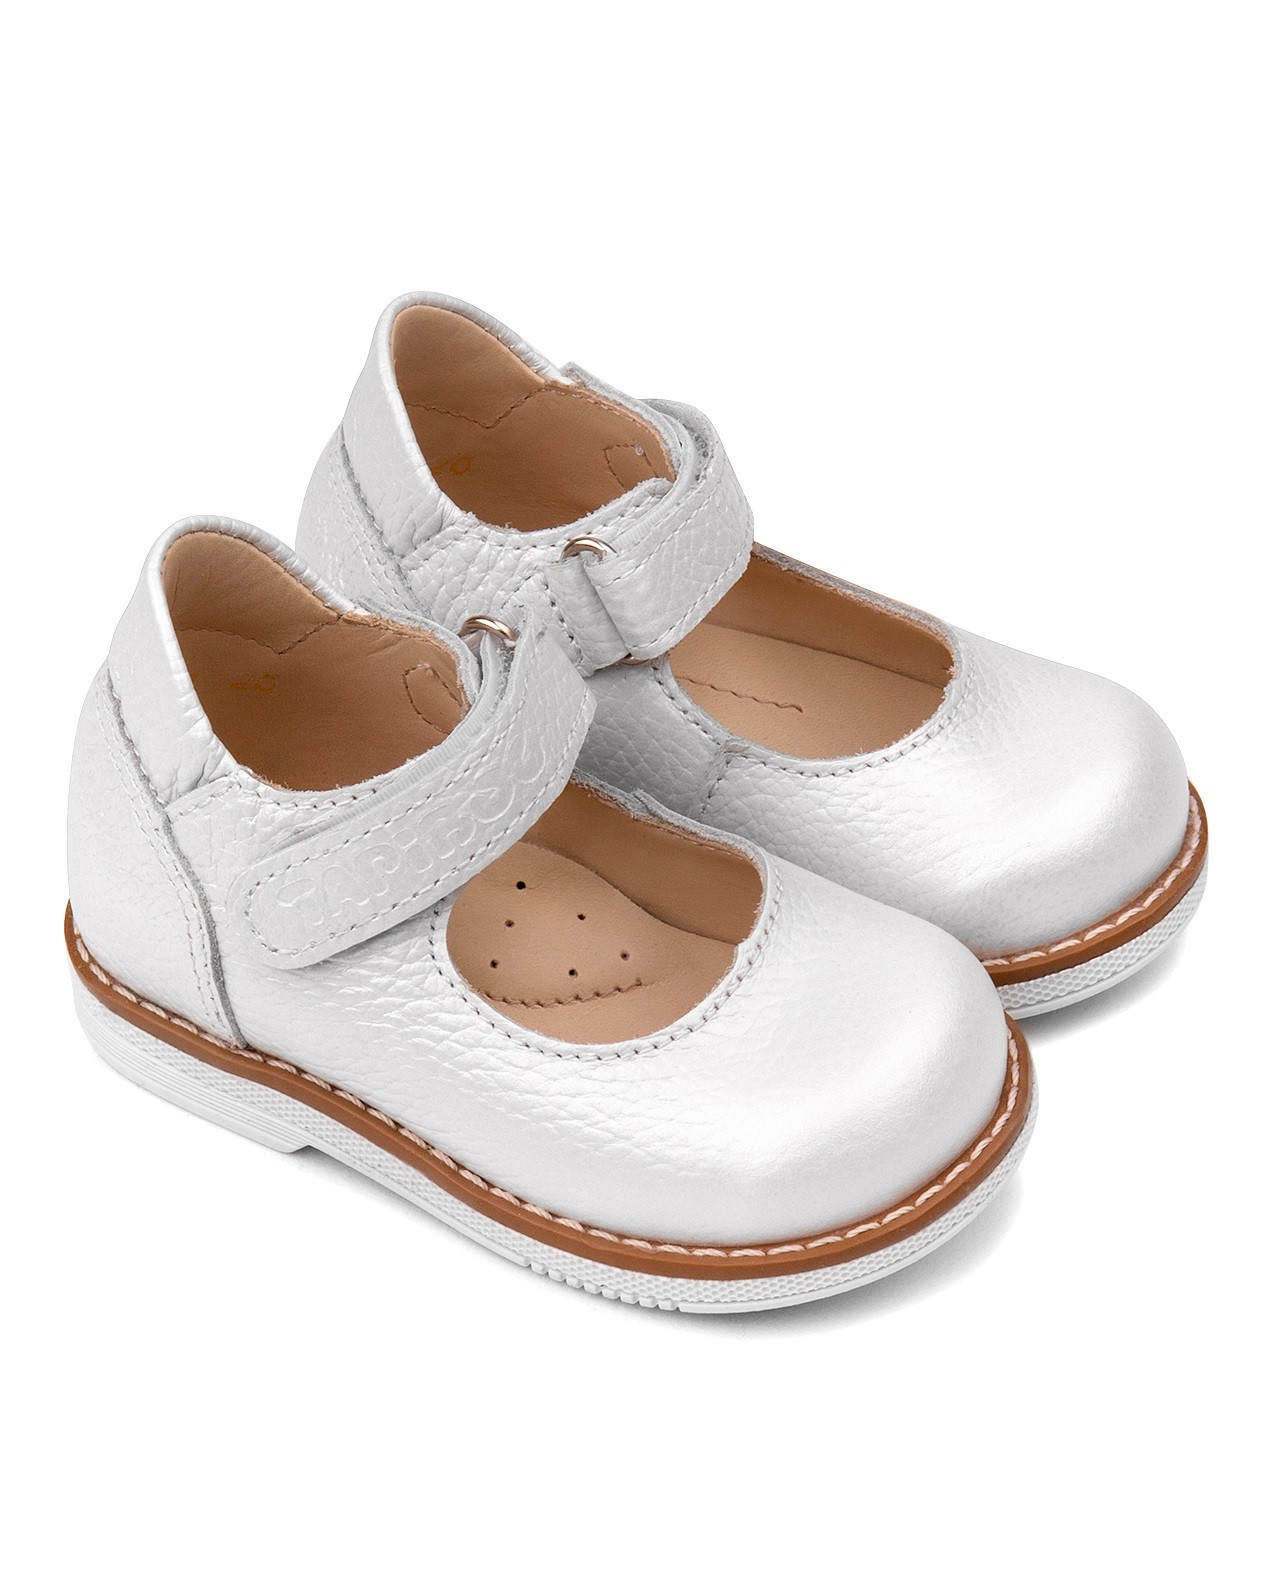 Туфли детские Tapiboo ЛАНДЫШ перламутр (80402, 22) туфли детские tapiboo ландыш 80233 31